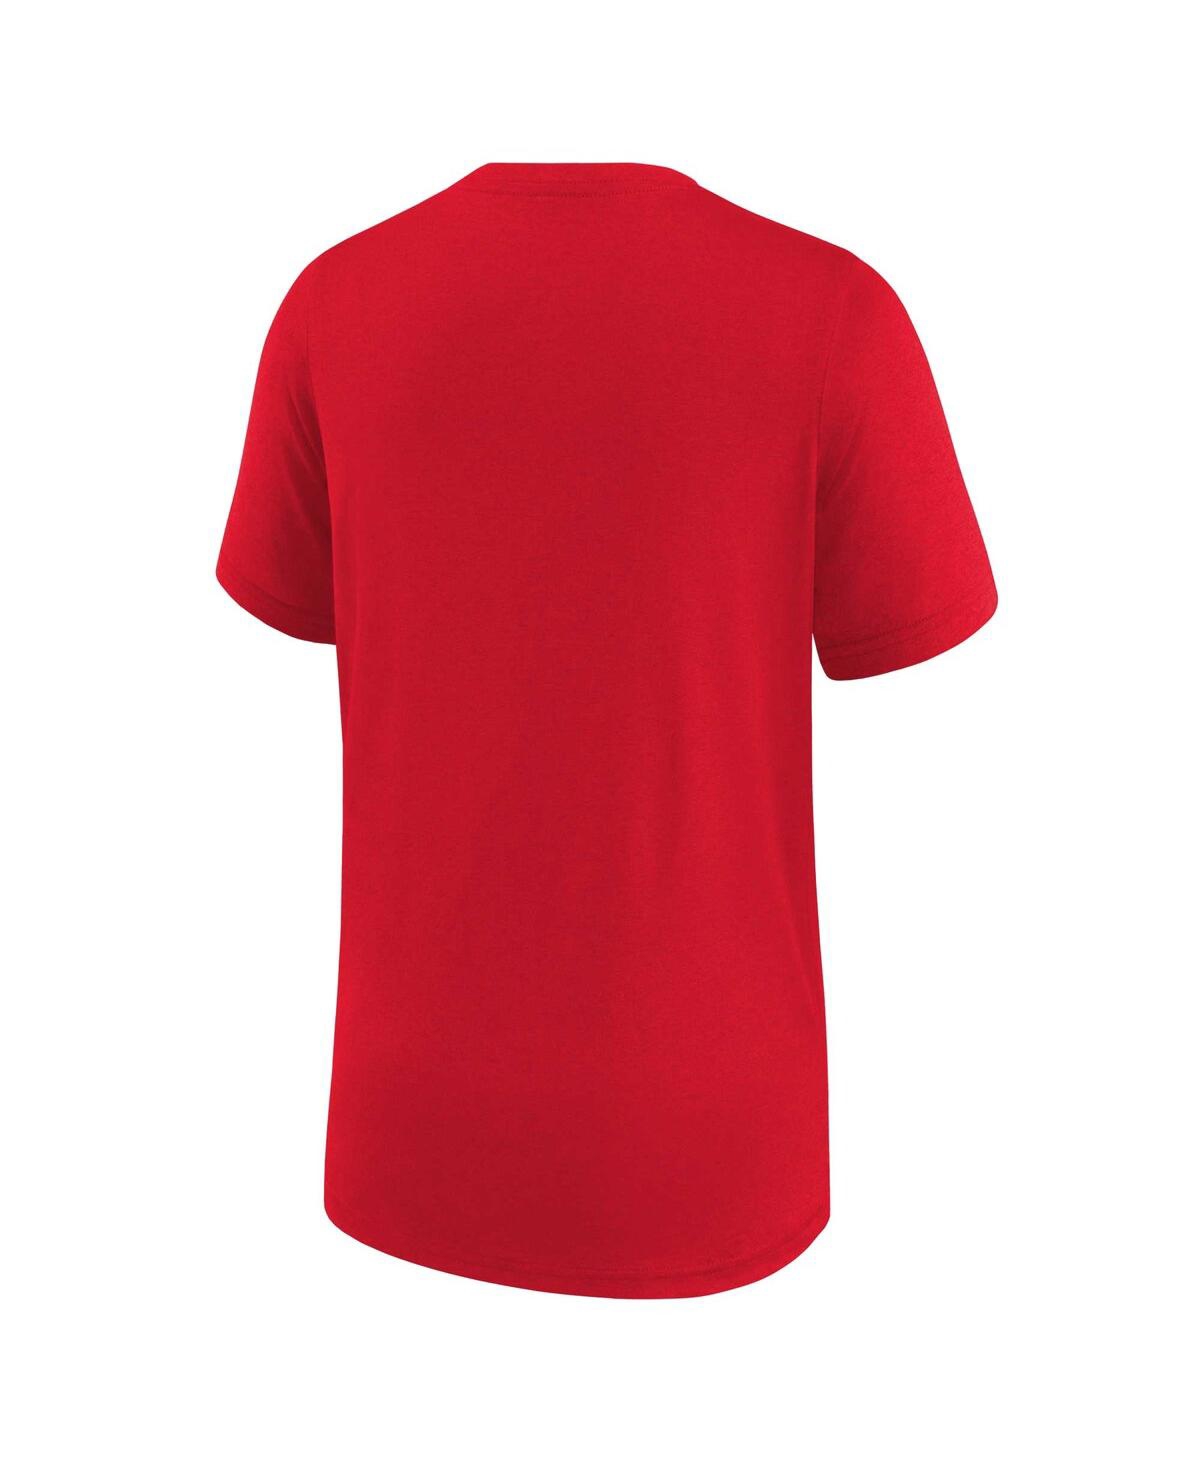 Shop Nike Big Boys  Red Atlanta Hawks Essential Practice T-shirt